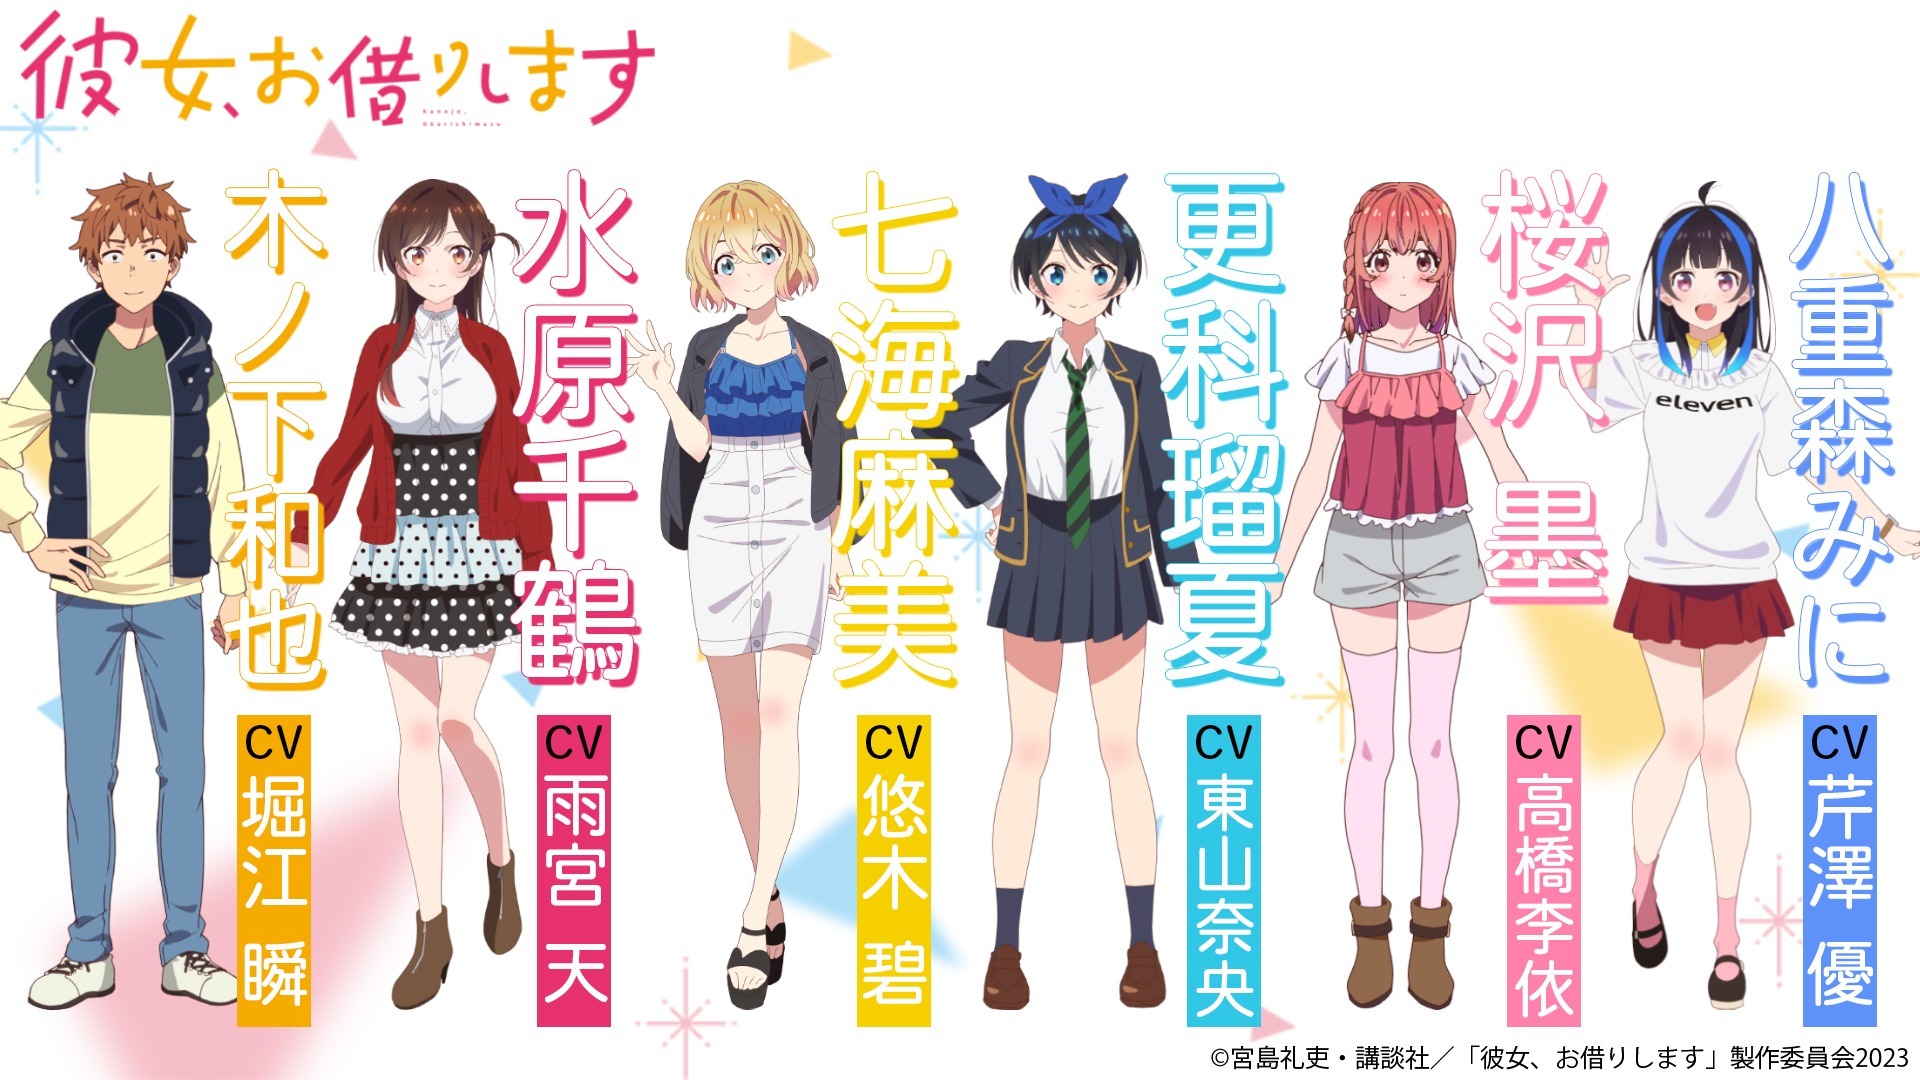 Season 3 of Rent-A-Girlfriend Anime Premieres July 7th